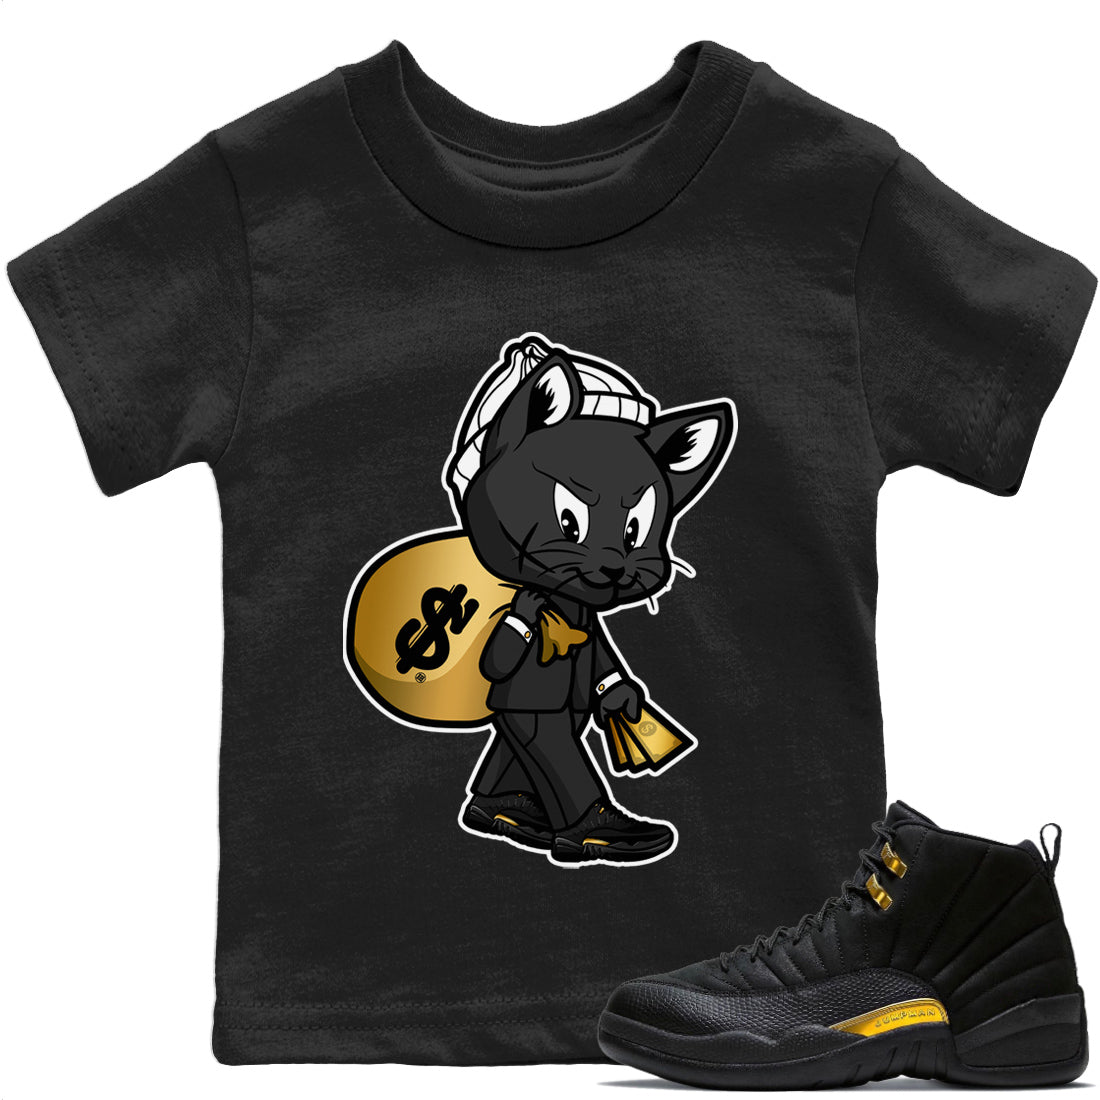 Jordan 12 Black Taxi Sneaker Match Tees Gangster Cat Sneaker Tees Jordan 12 Black Taxi Sneaker Release Tees Kids Shirts